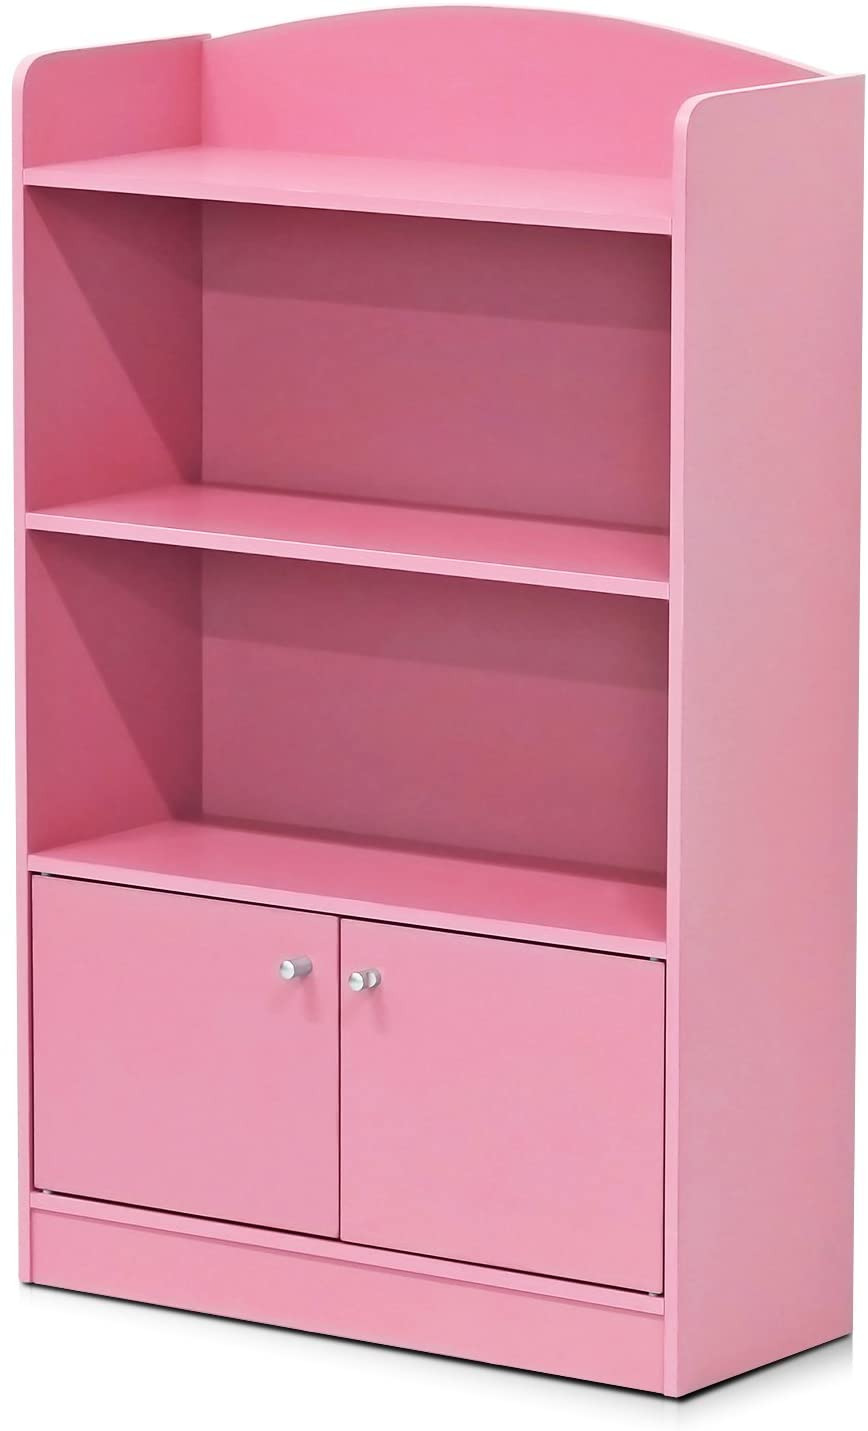 Stylish Kidkanac Bookshelf Kid Bookcases With Storage Cabinet Safety, Pink